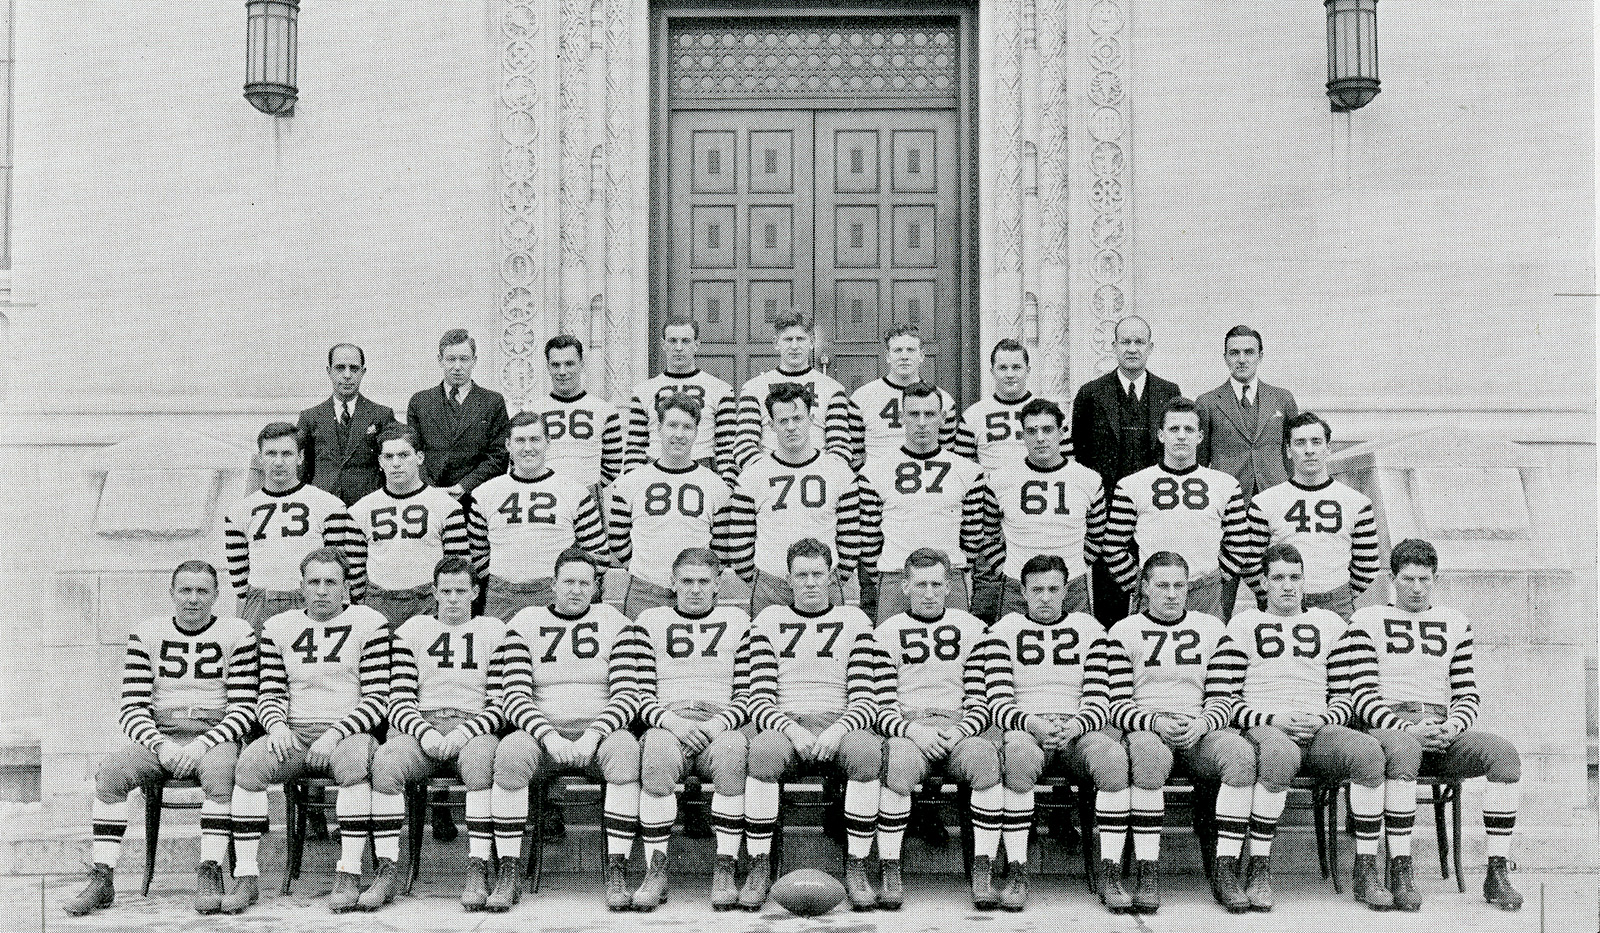 Catholic University 1936 Football team and Orange Bowl champions